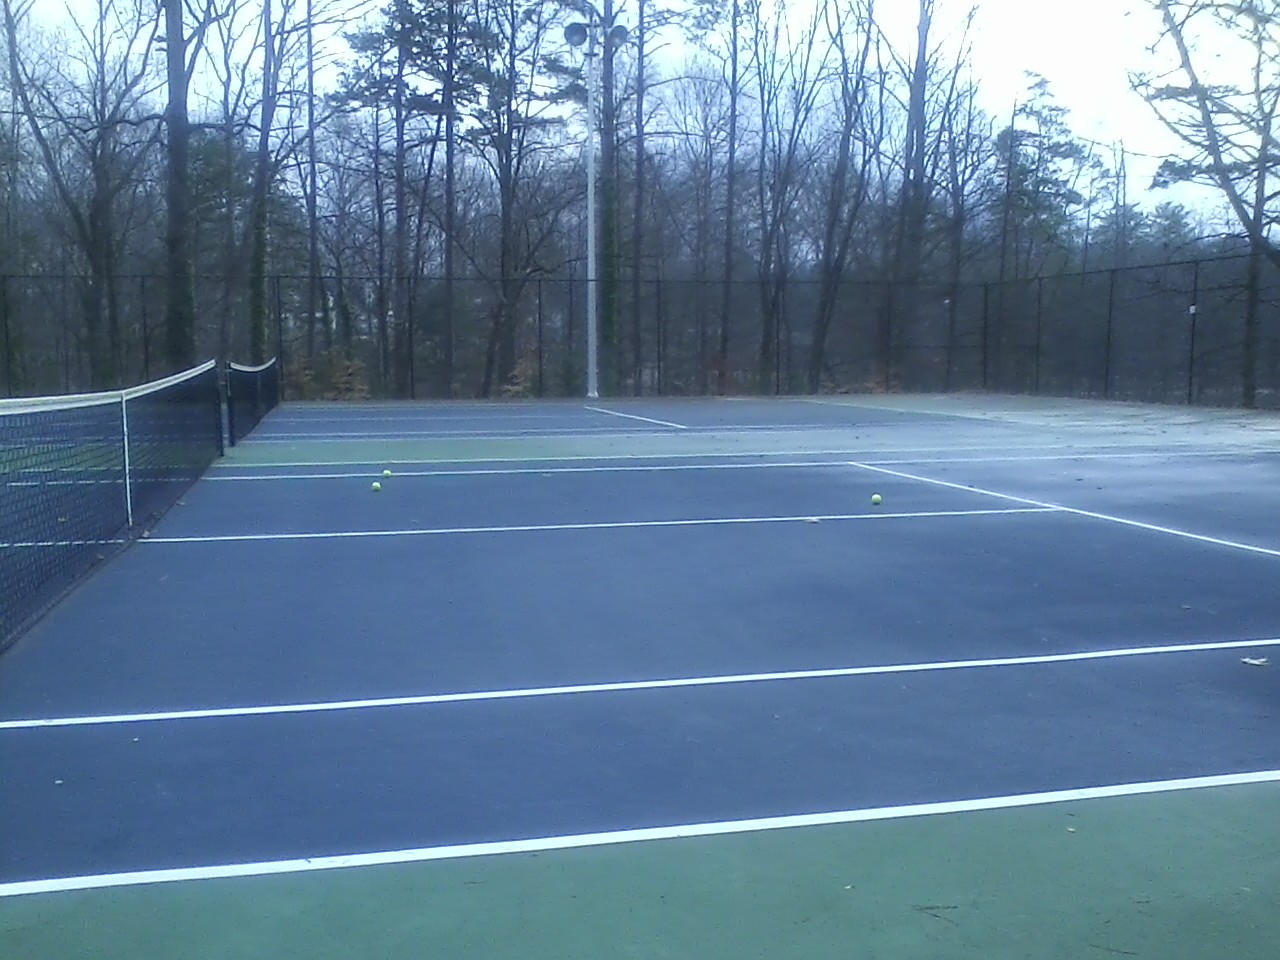 Neko Random: My Day Yesterday: Tennis!